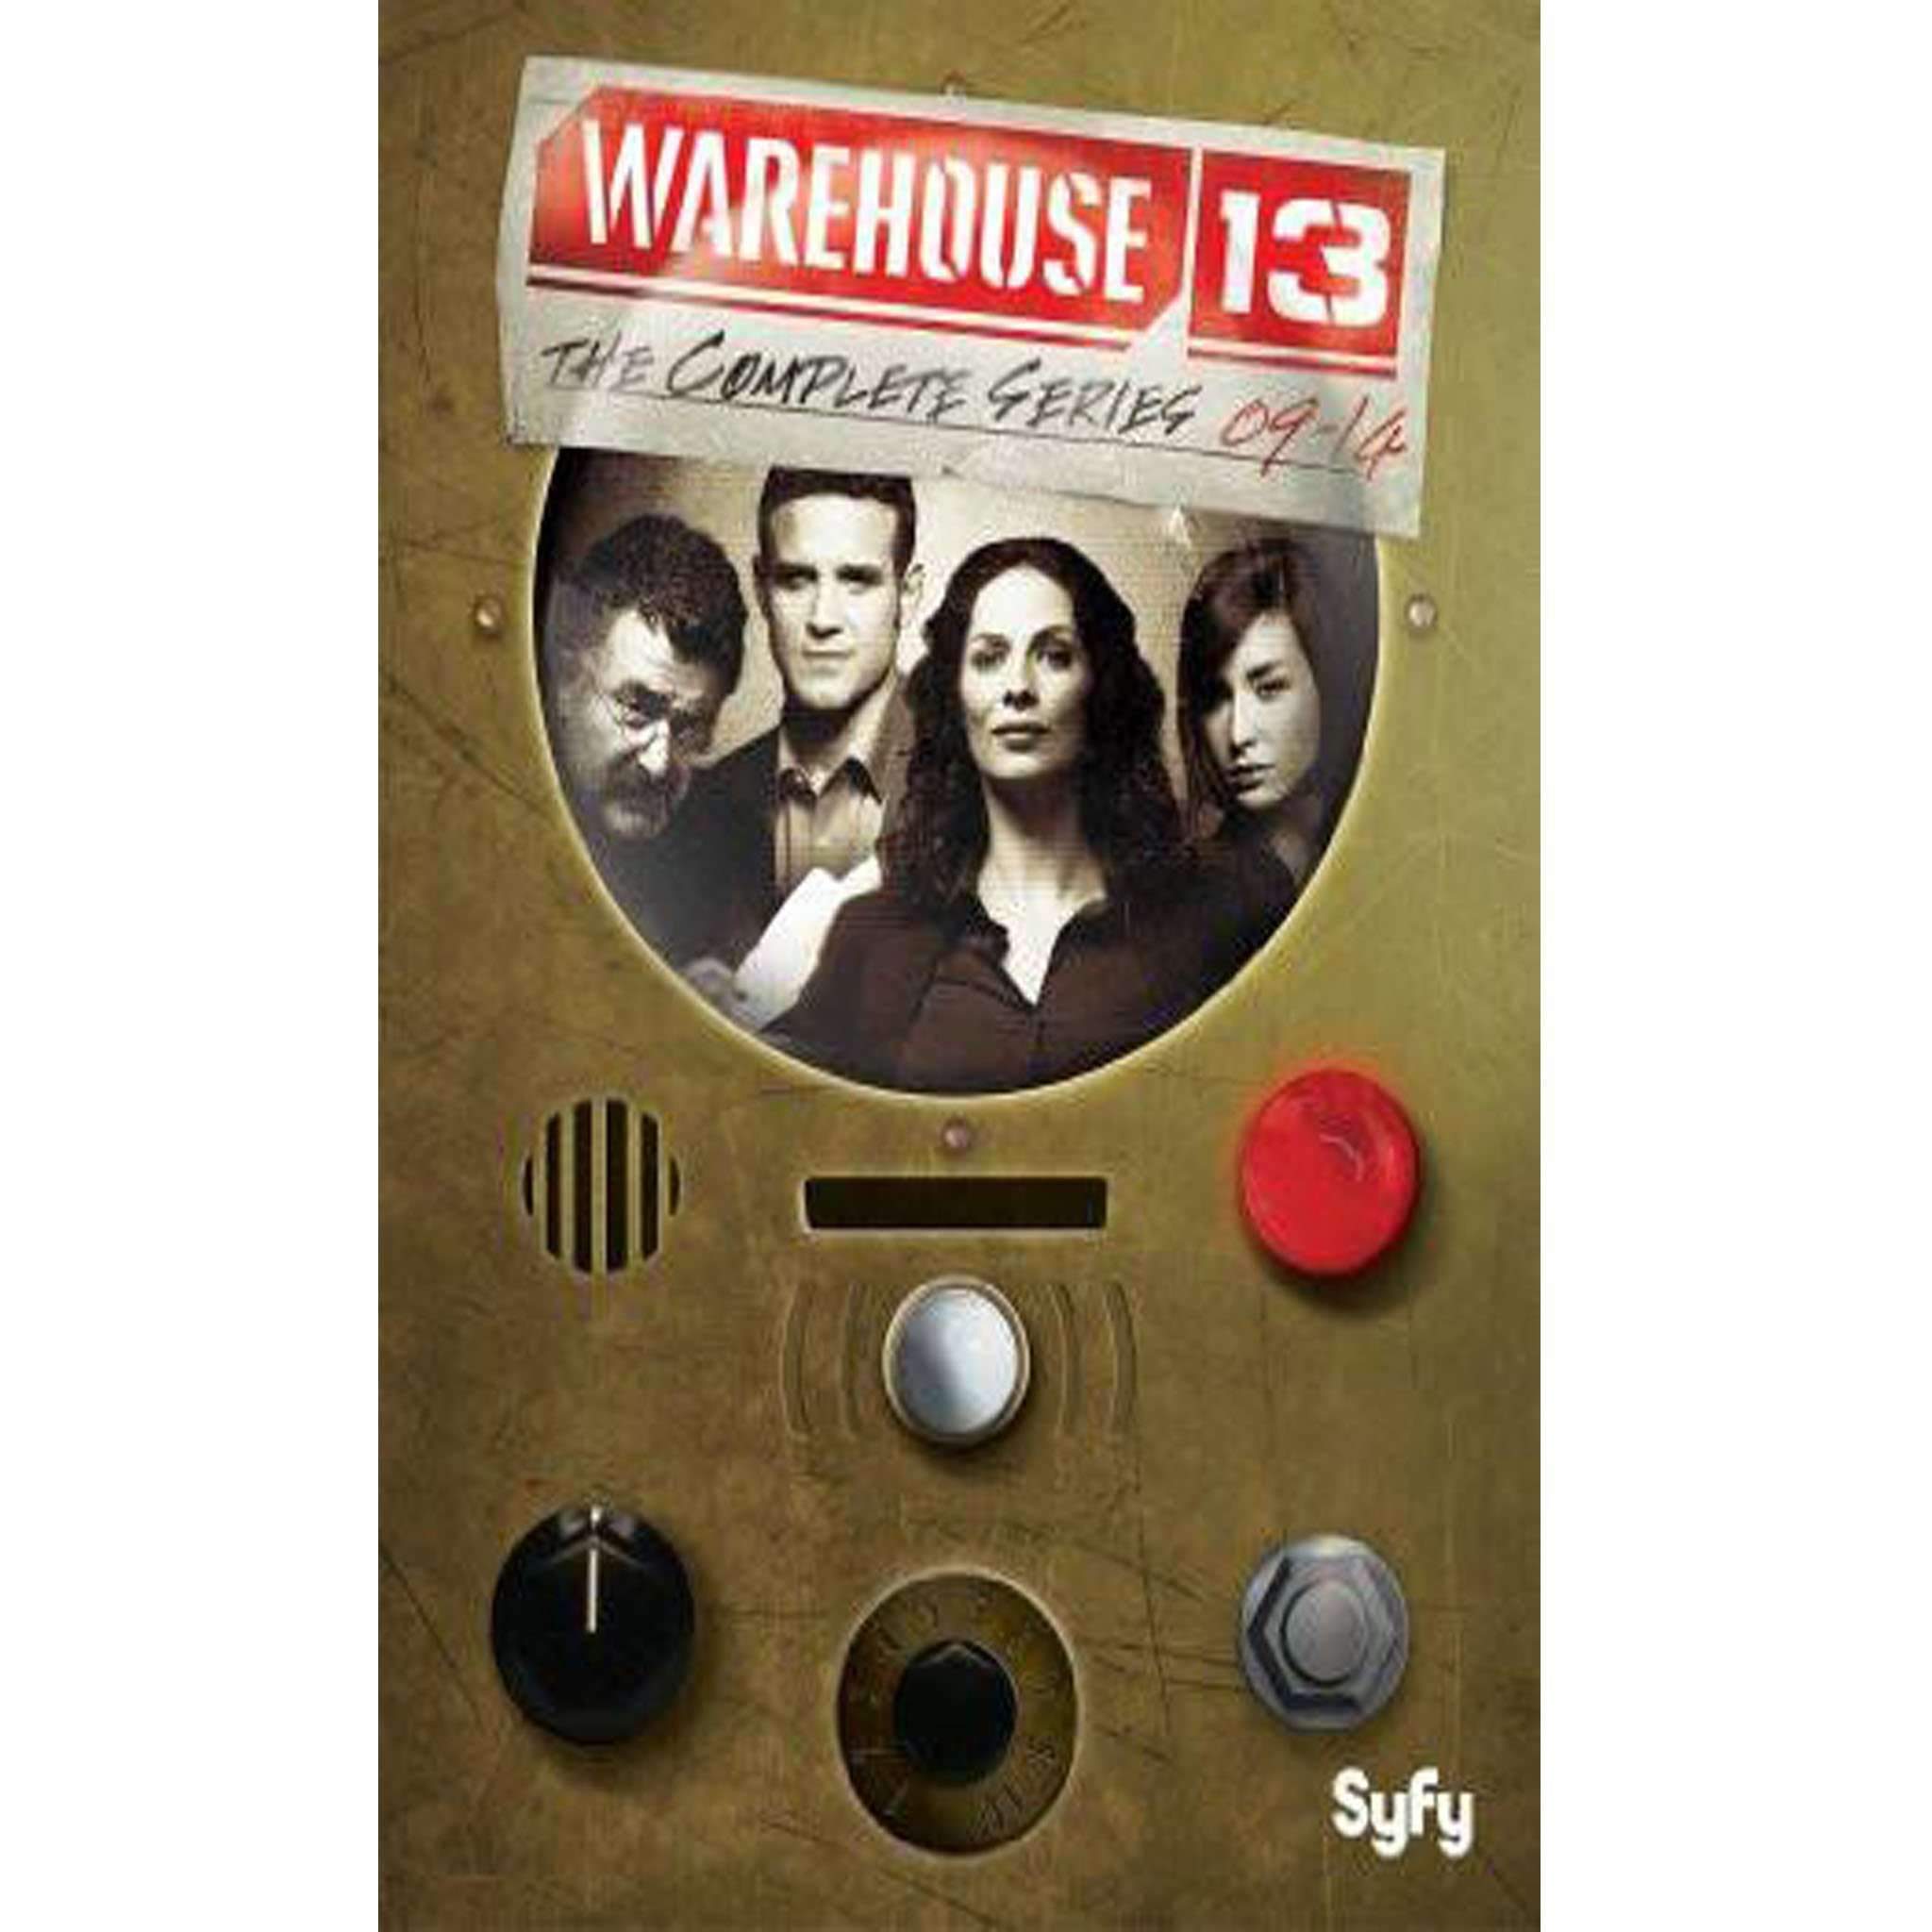 Warehouse 13 DVD Complete Series Box Set Universal Studios DVDs & Blu-ray Discs > DVDs > Box Sets